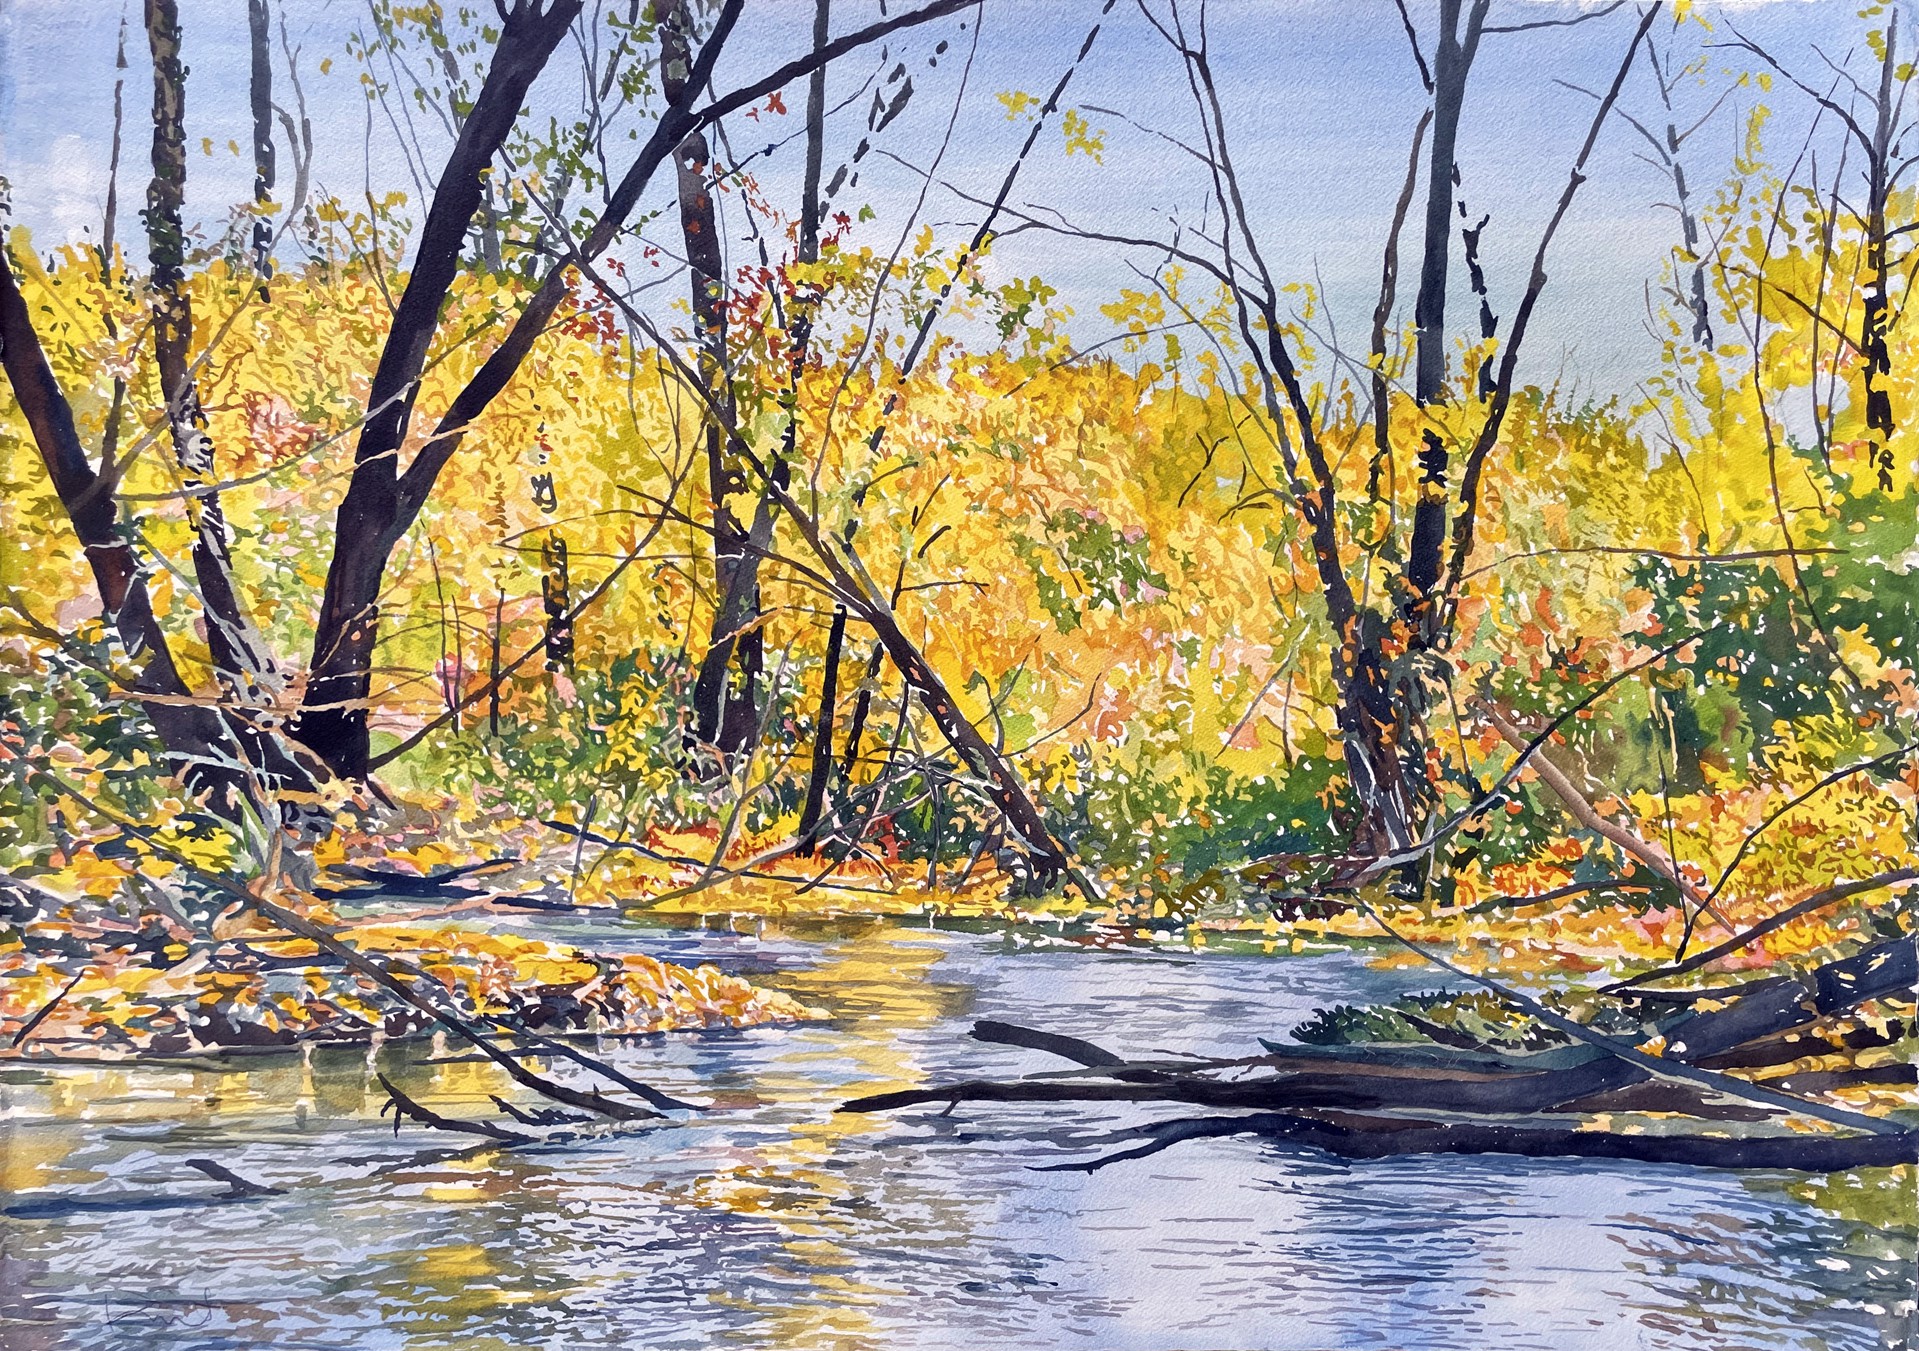 Boise River Fall #2 by Divit Cardoza